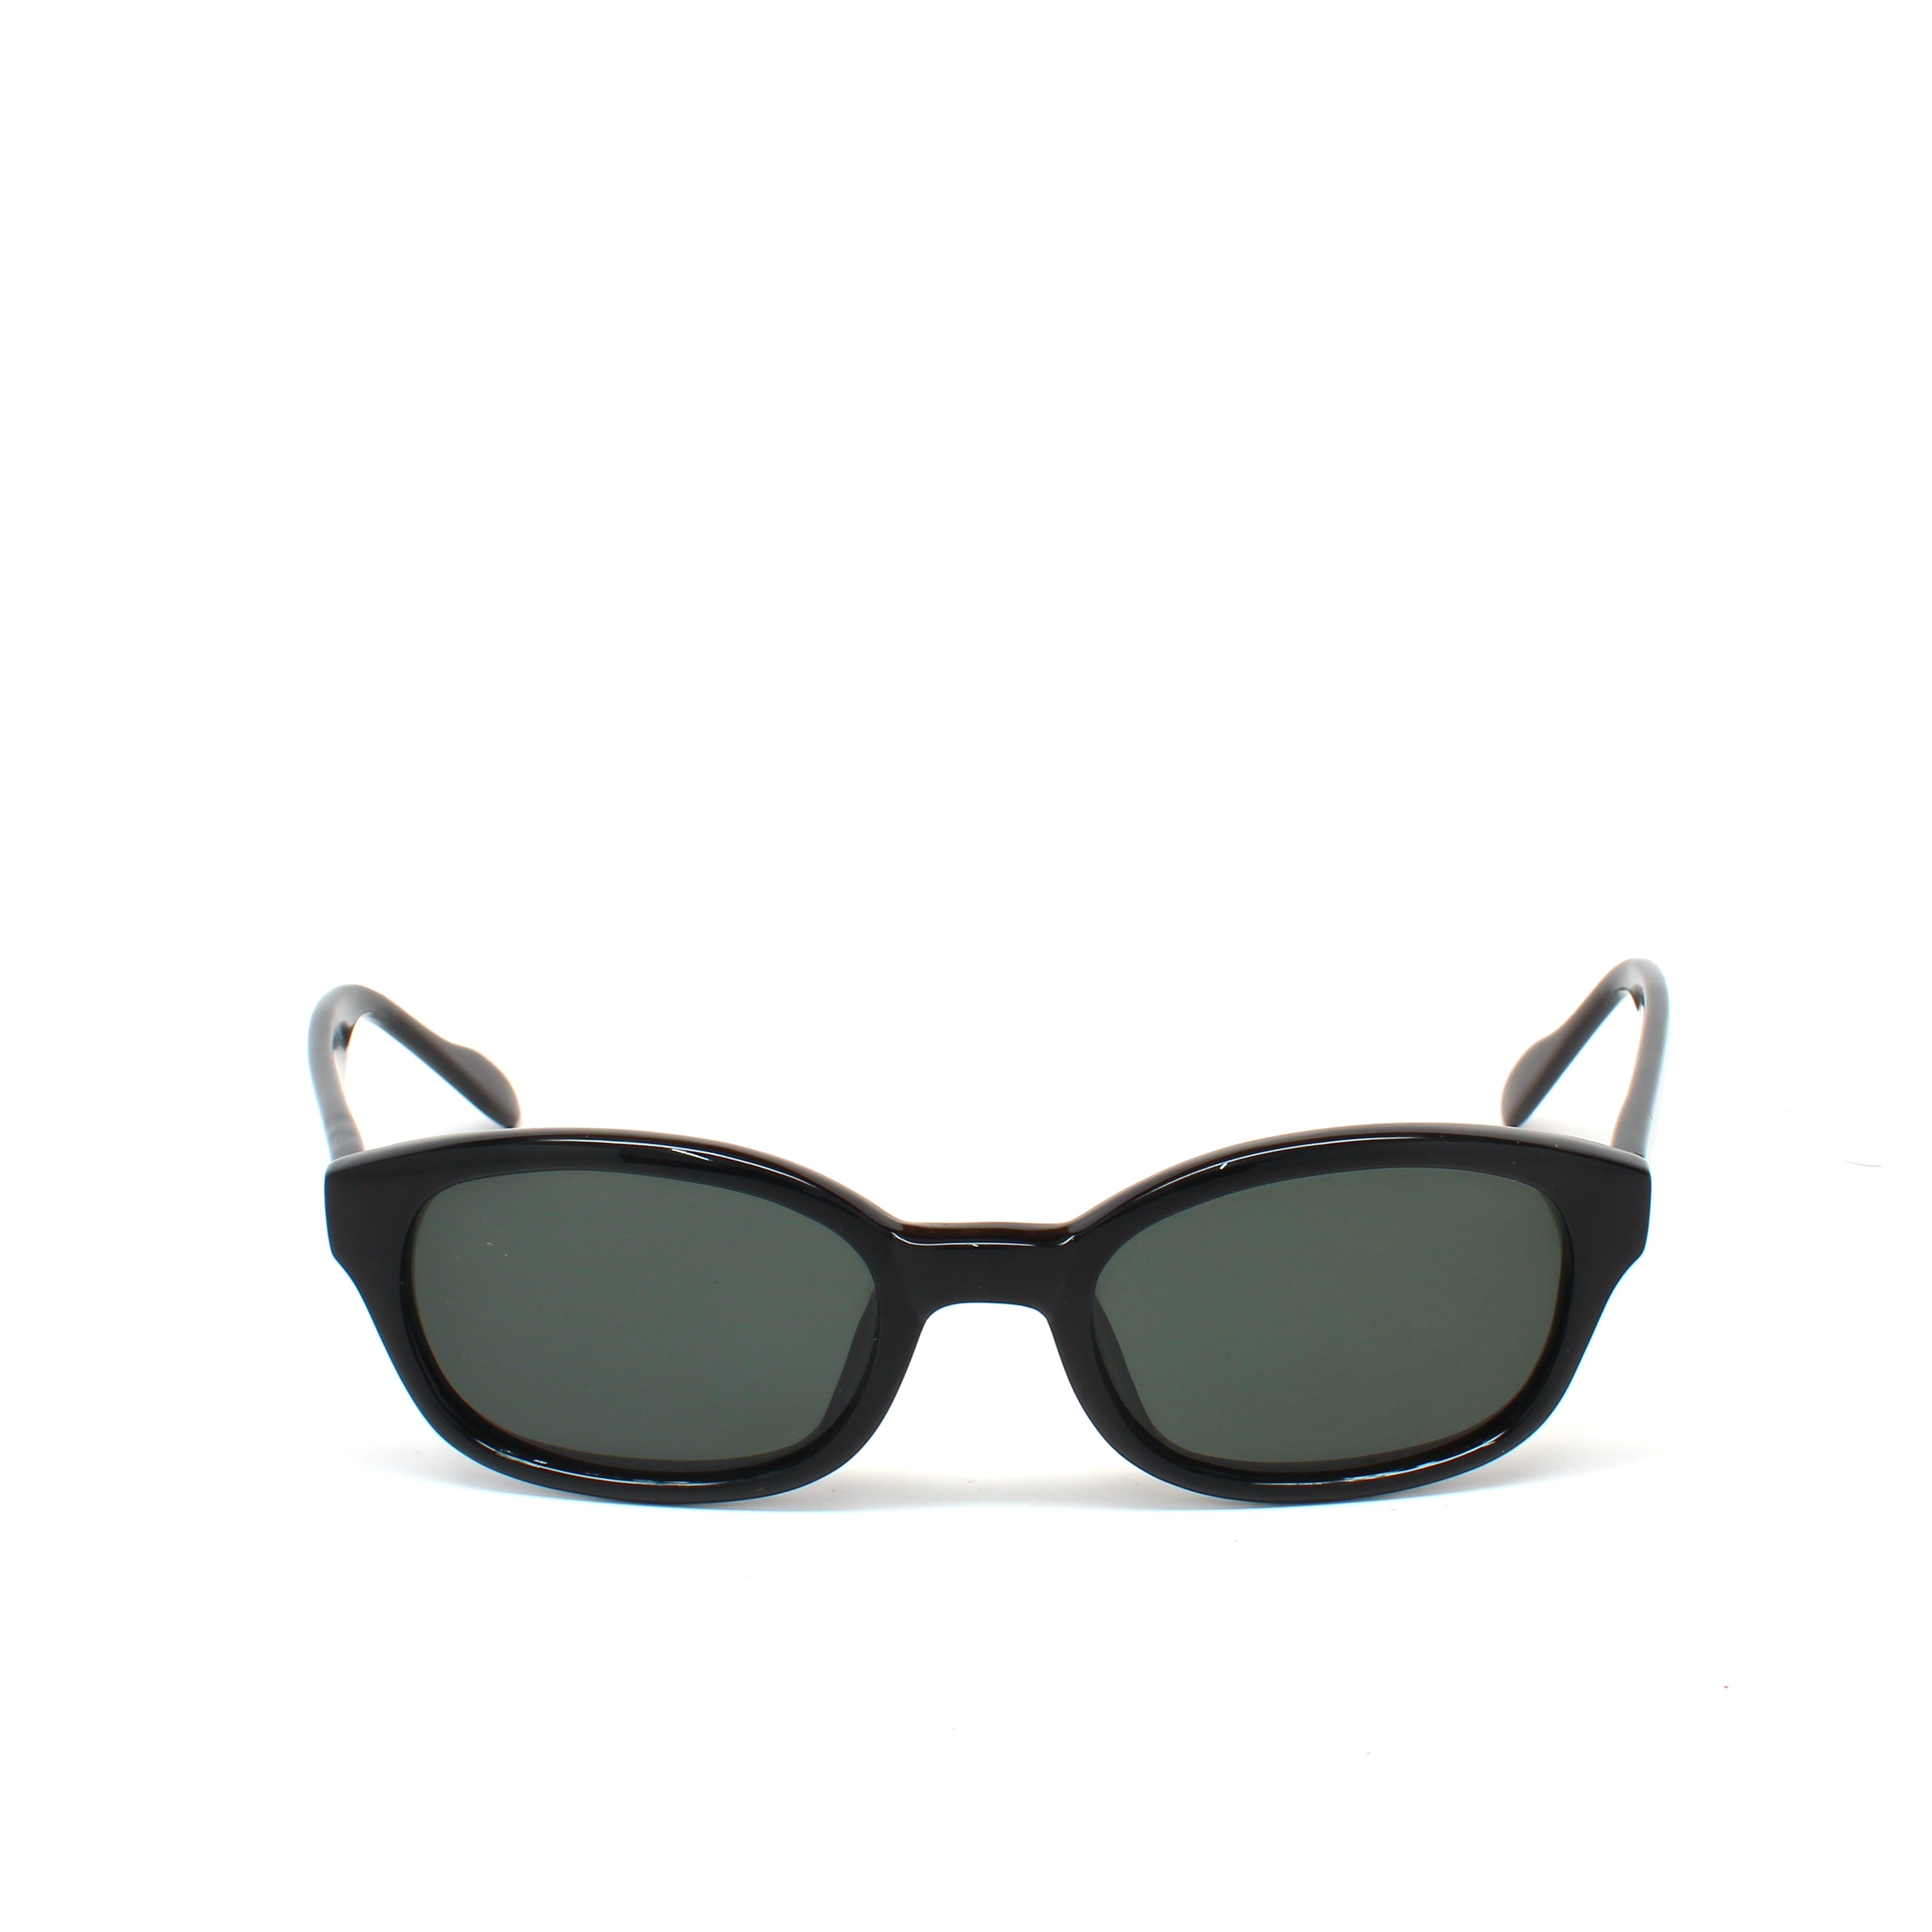 Buy Vintage 90s Slim Black Rectangle Sunglasses Online in India - Etsy